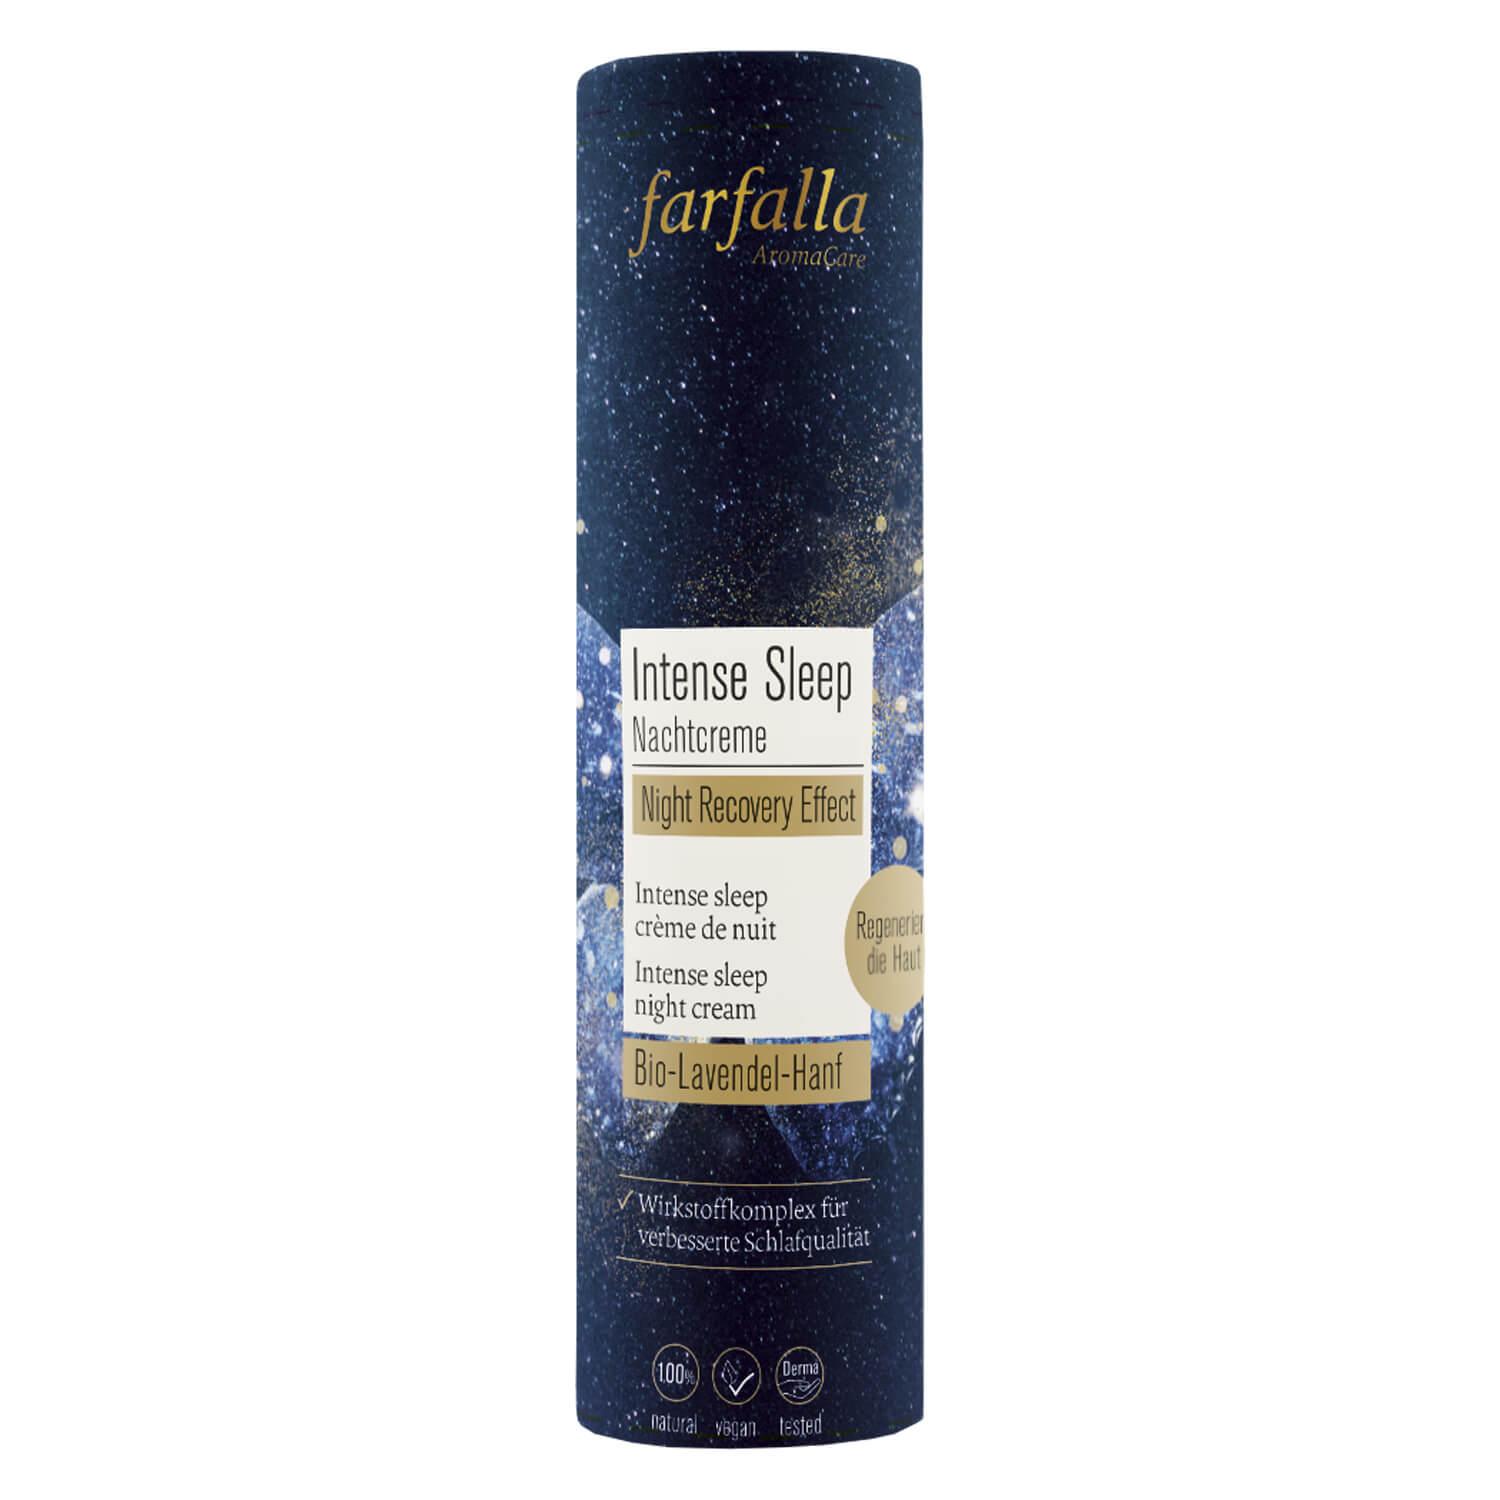 Farfalla Care - Intense Sleep Crème de Nuit Night Recovery Effect